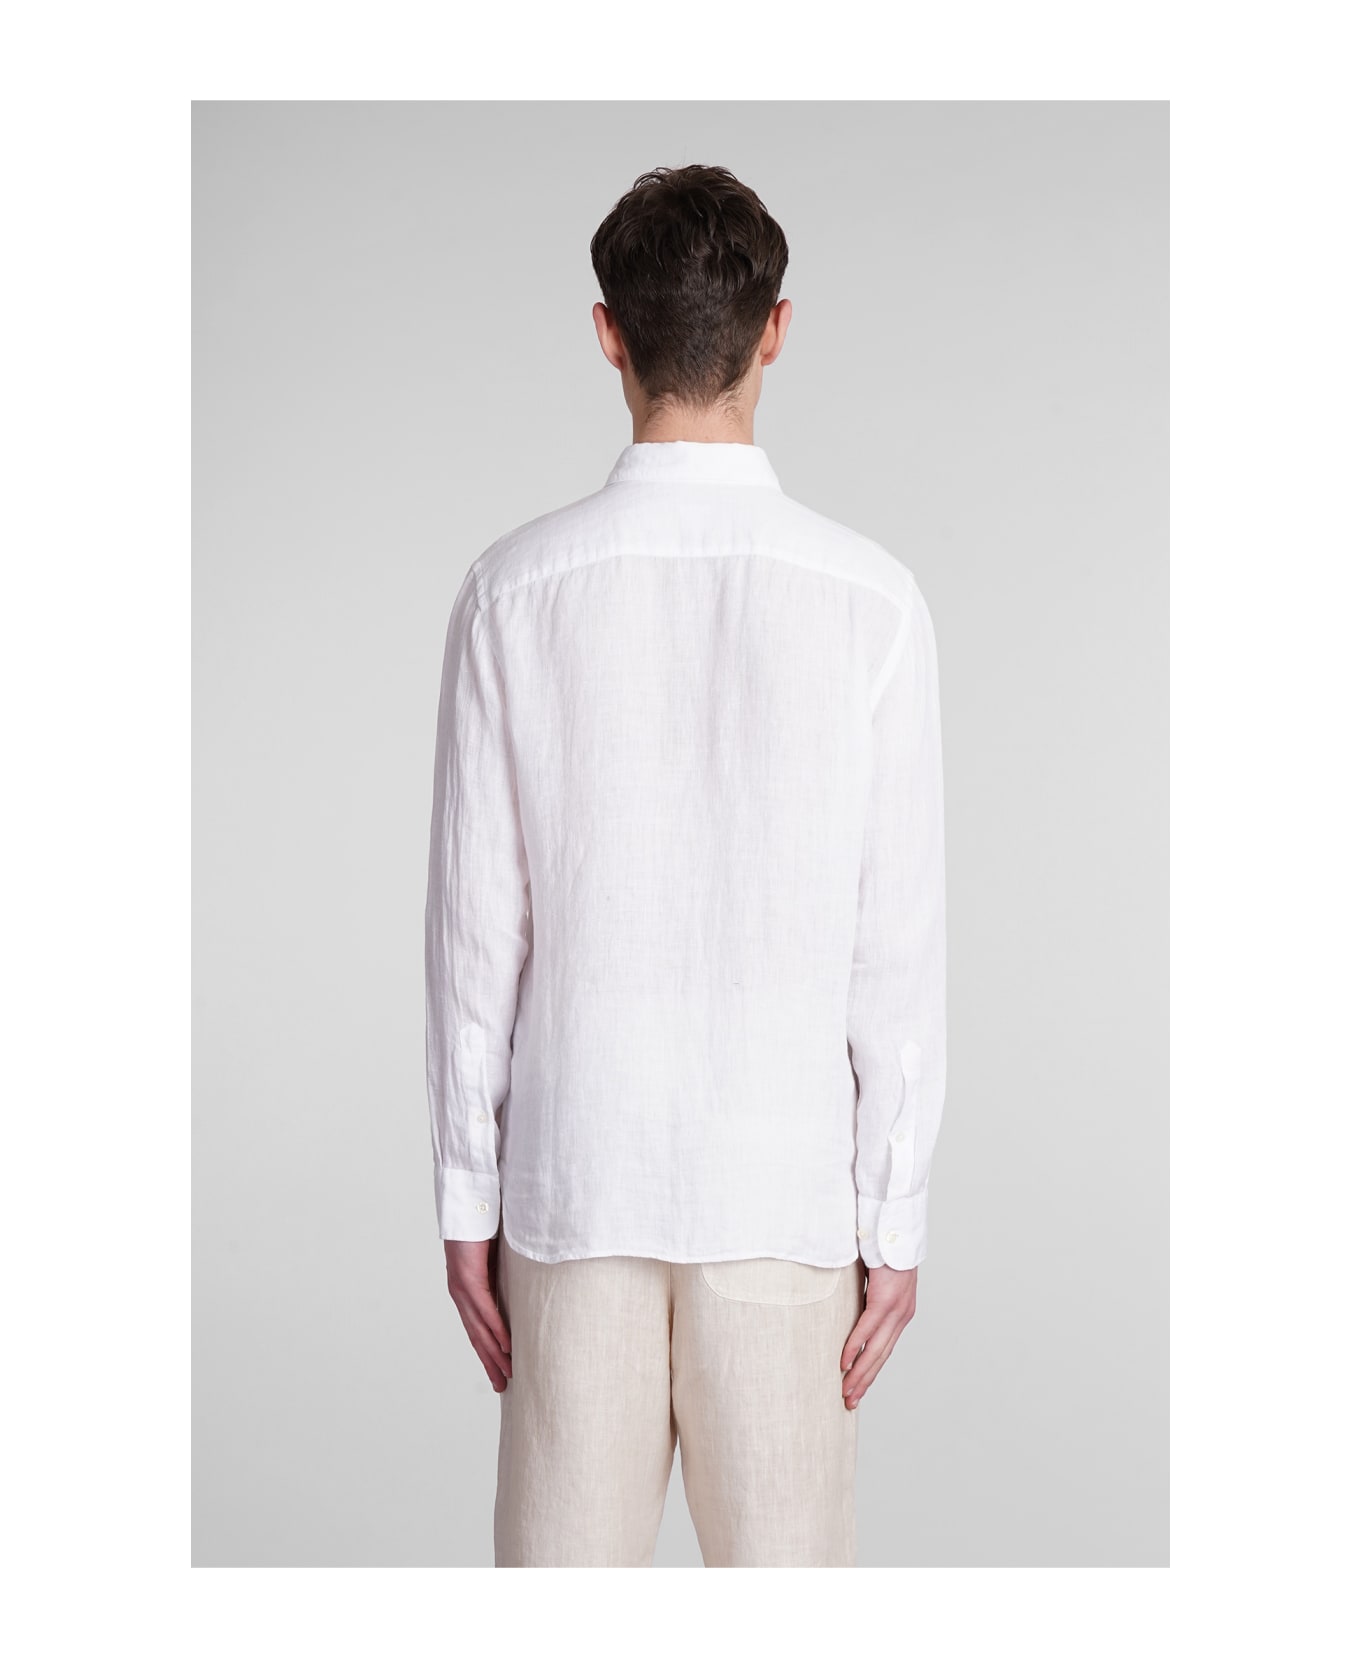 120% Lino Shirt In White Linen - White